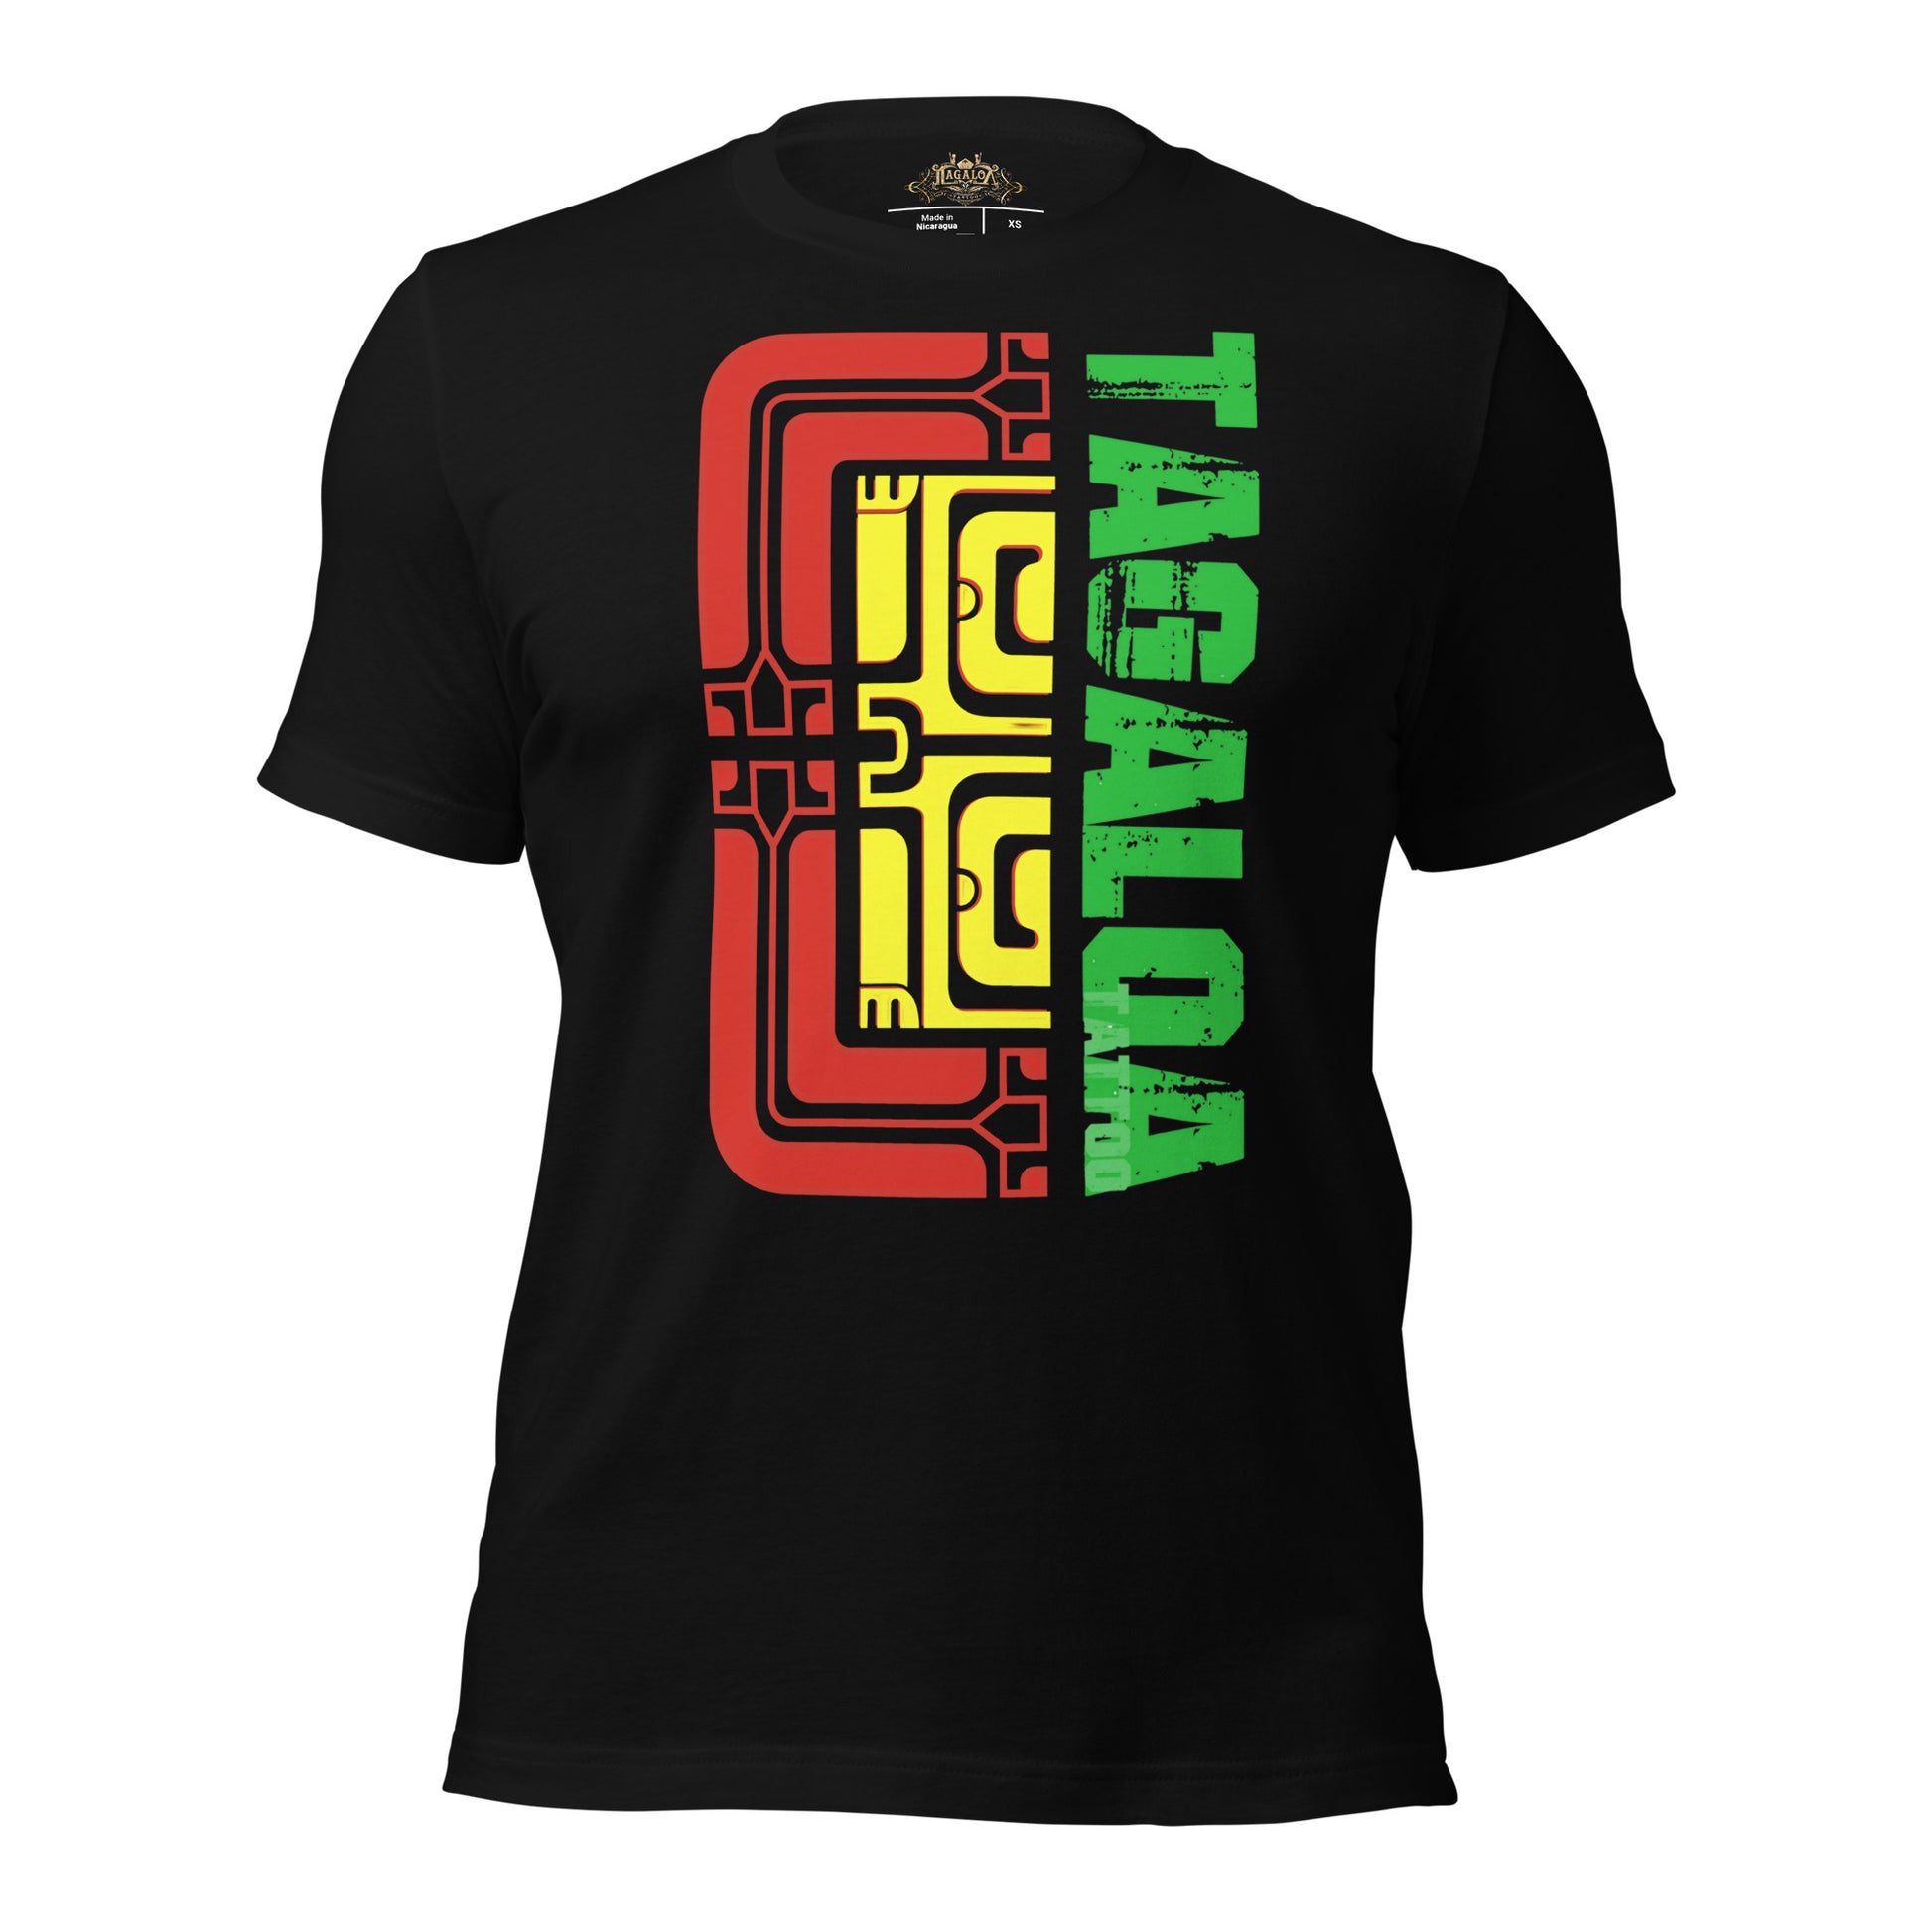 Black Unisex T-Shirt: Vibrant Colors